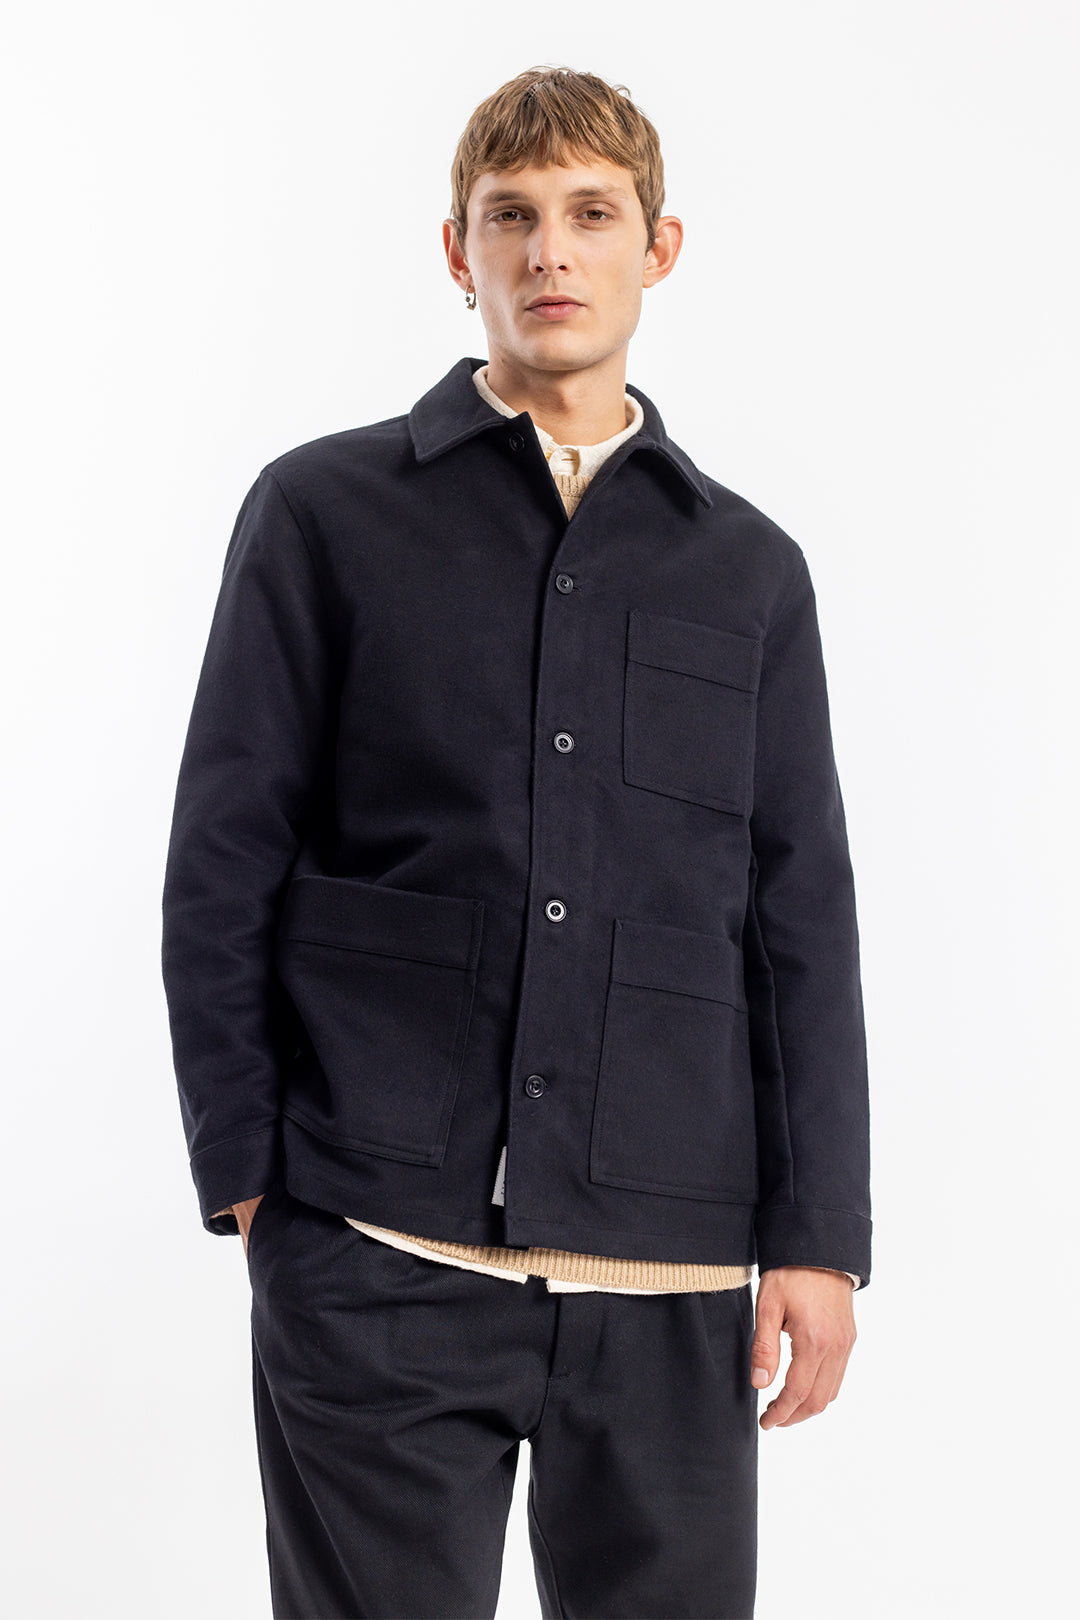 Black Moleskin jacket made from 100% organic cotton from Rotholz